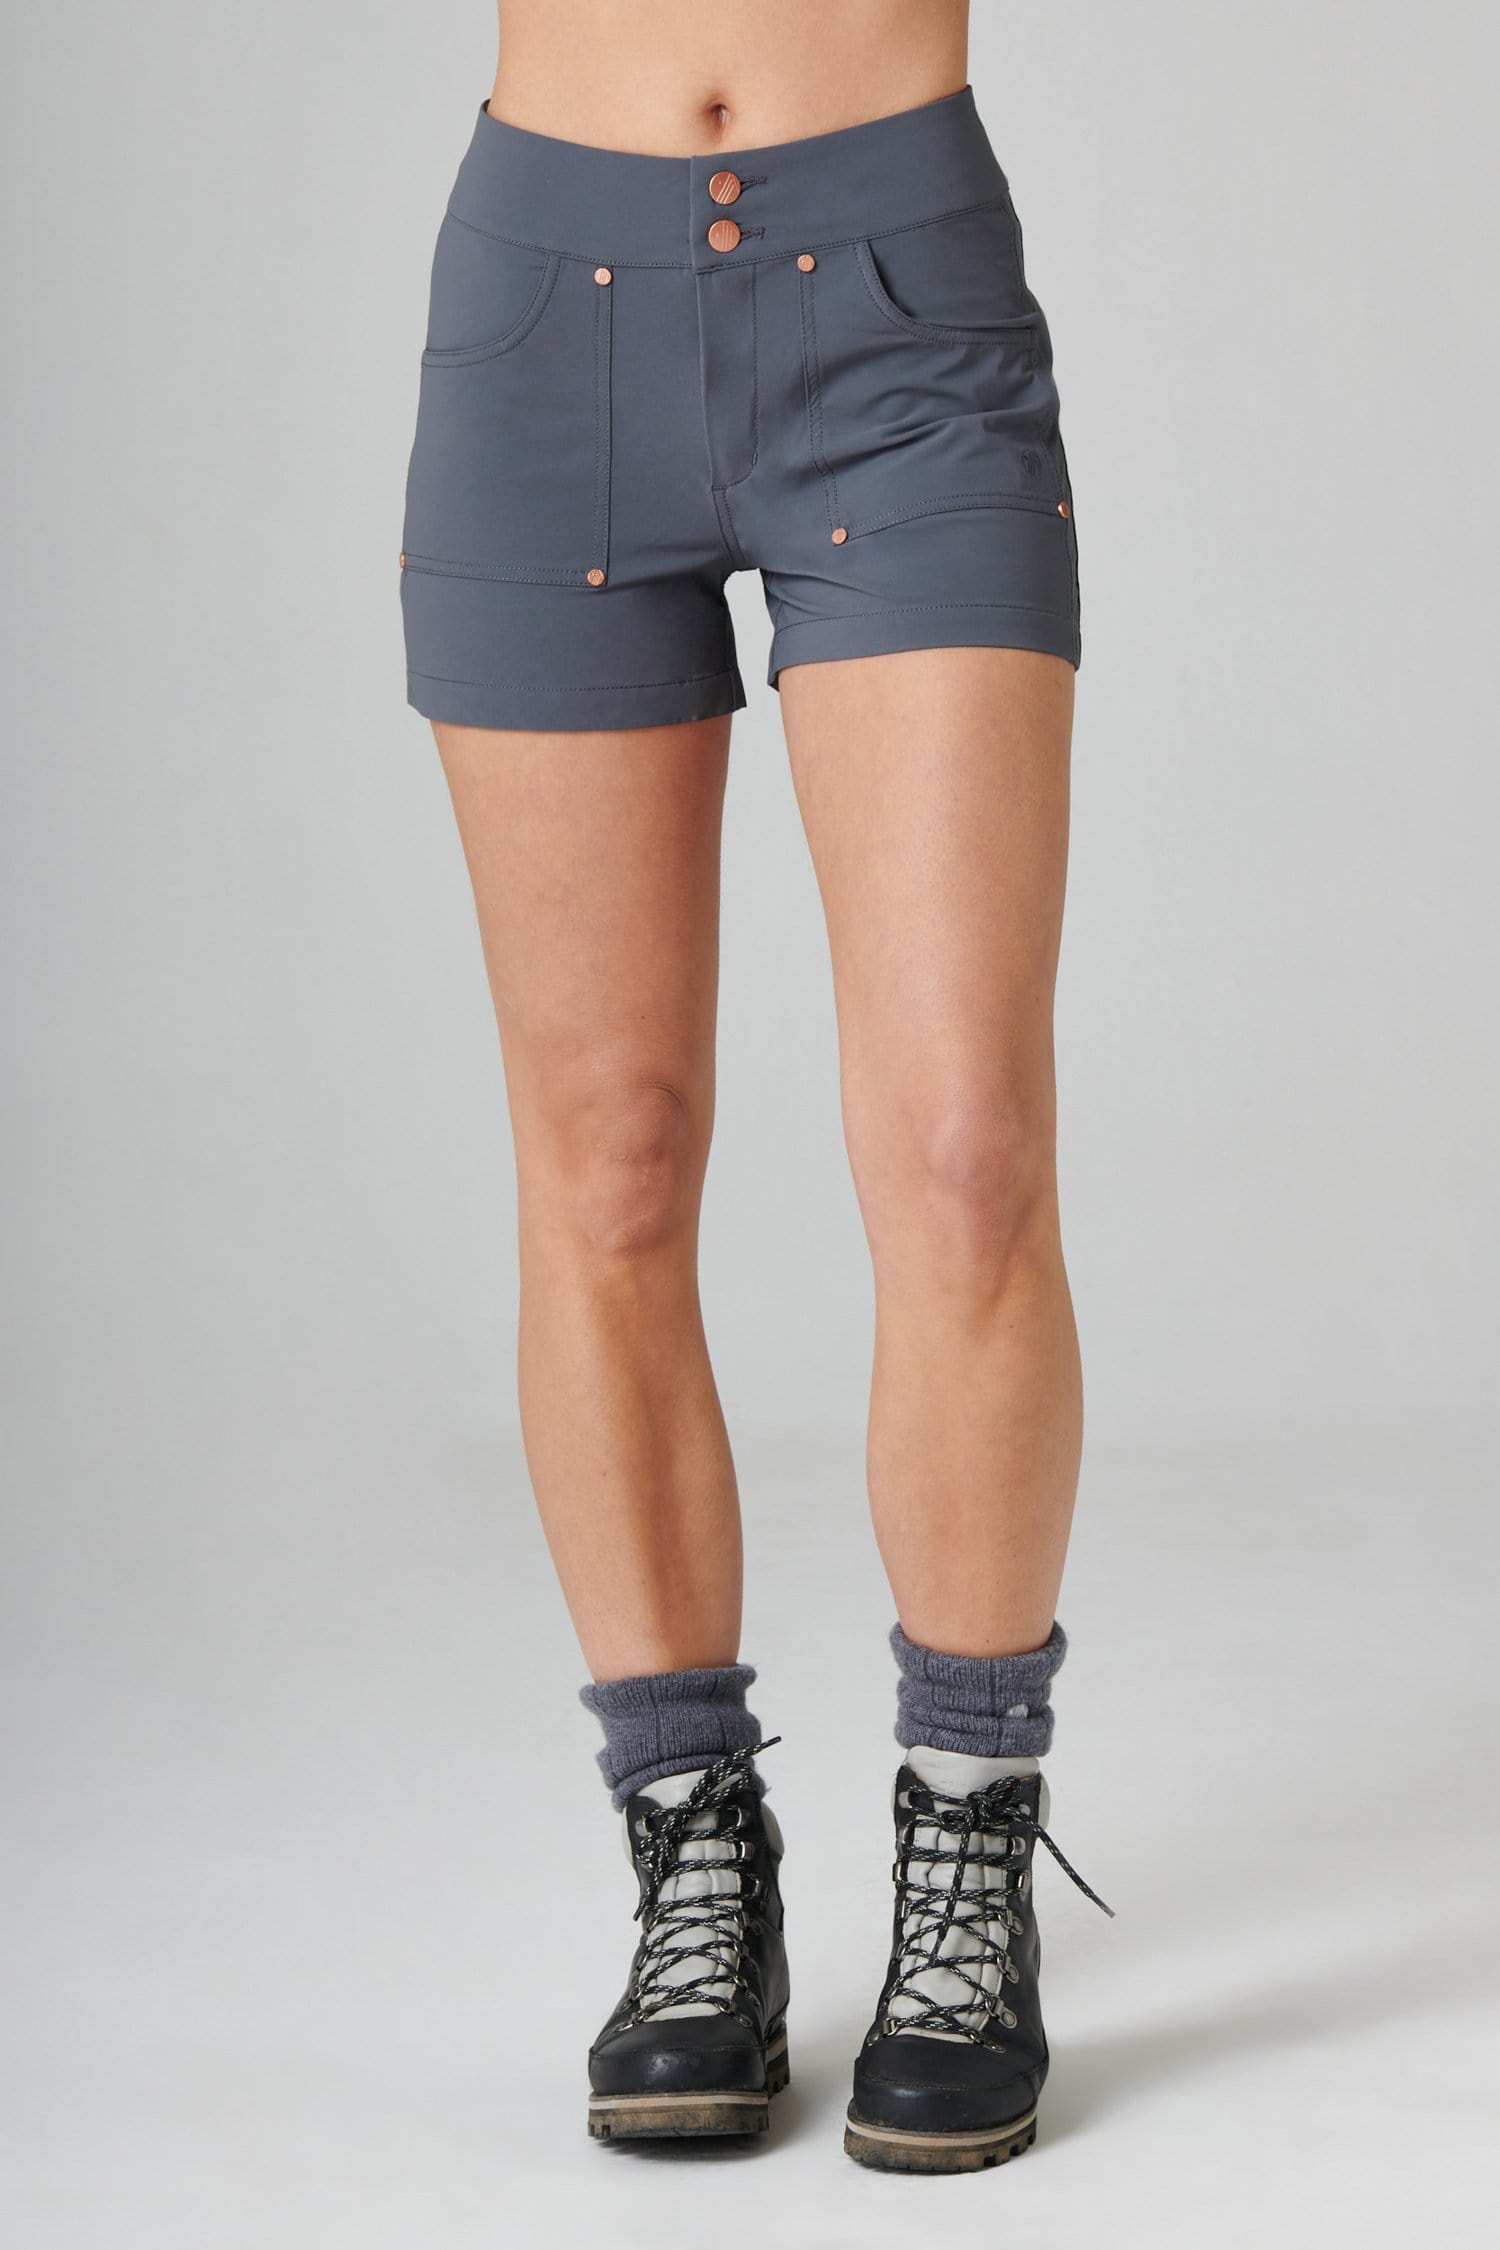 Trek Shorts - Storm Grey - 26 / Uk8 - Womens - Acai Outdoorwear